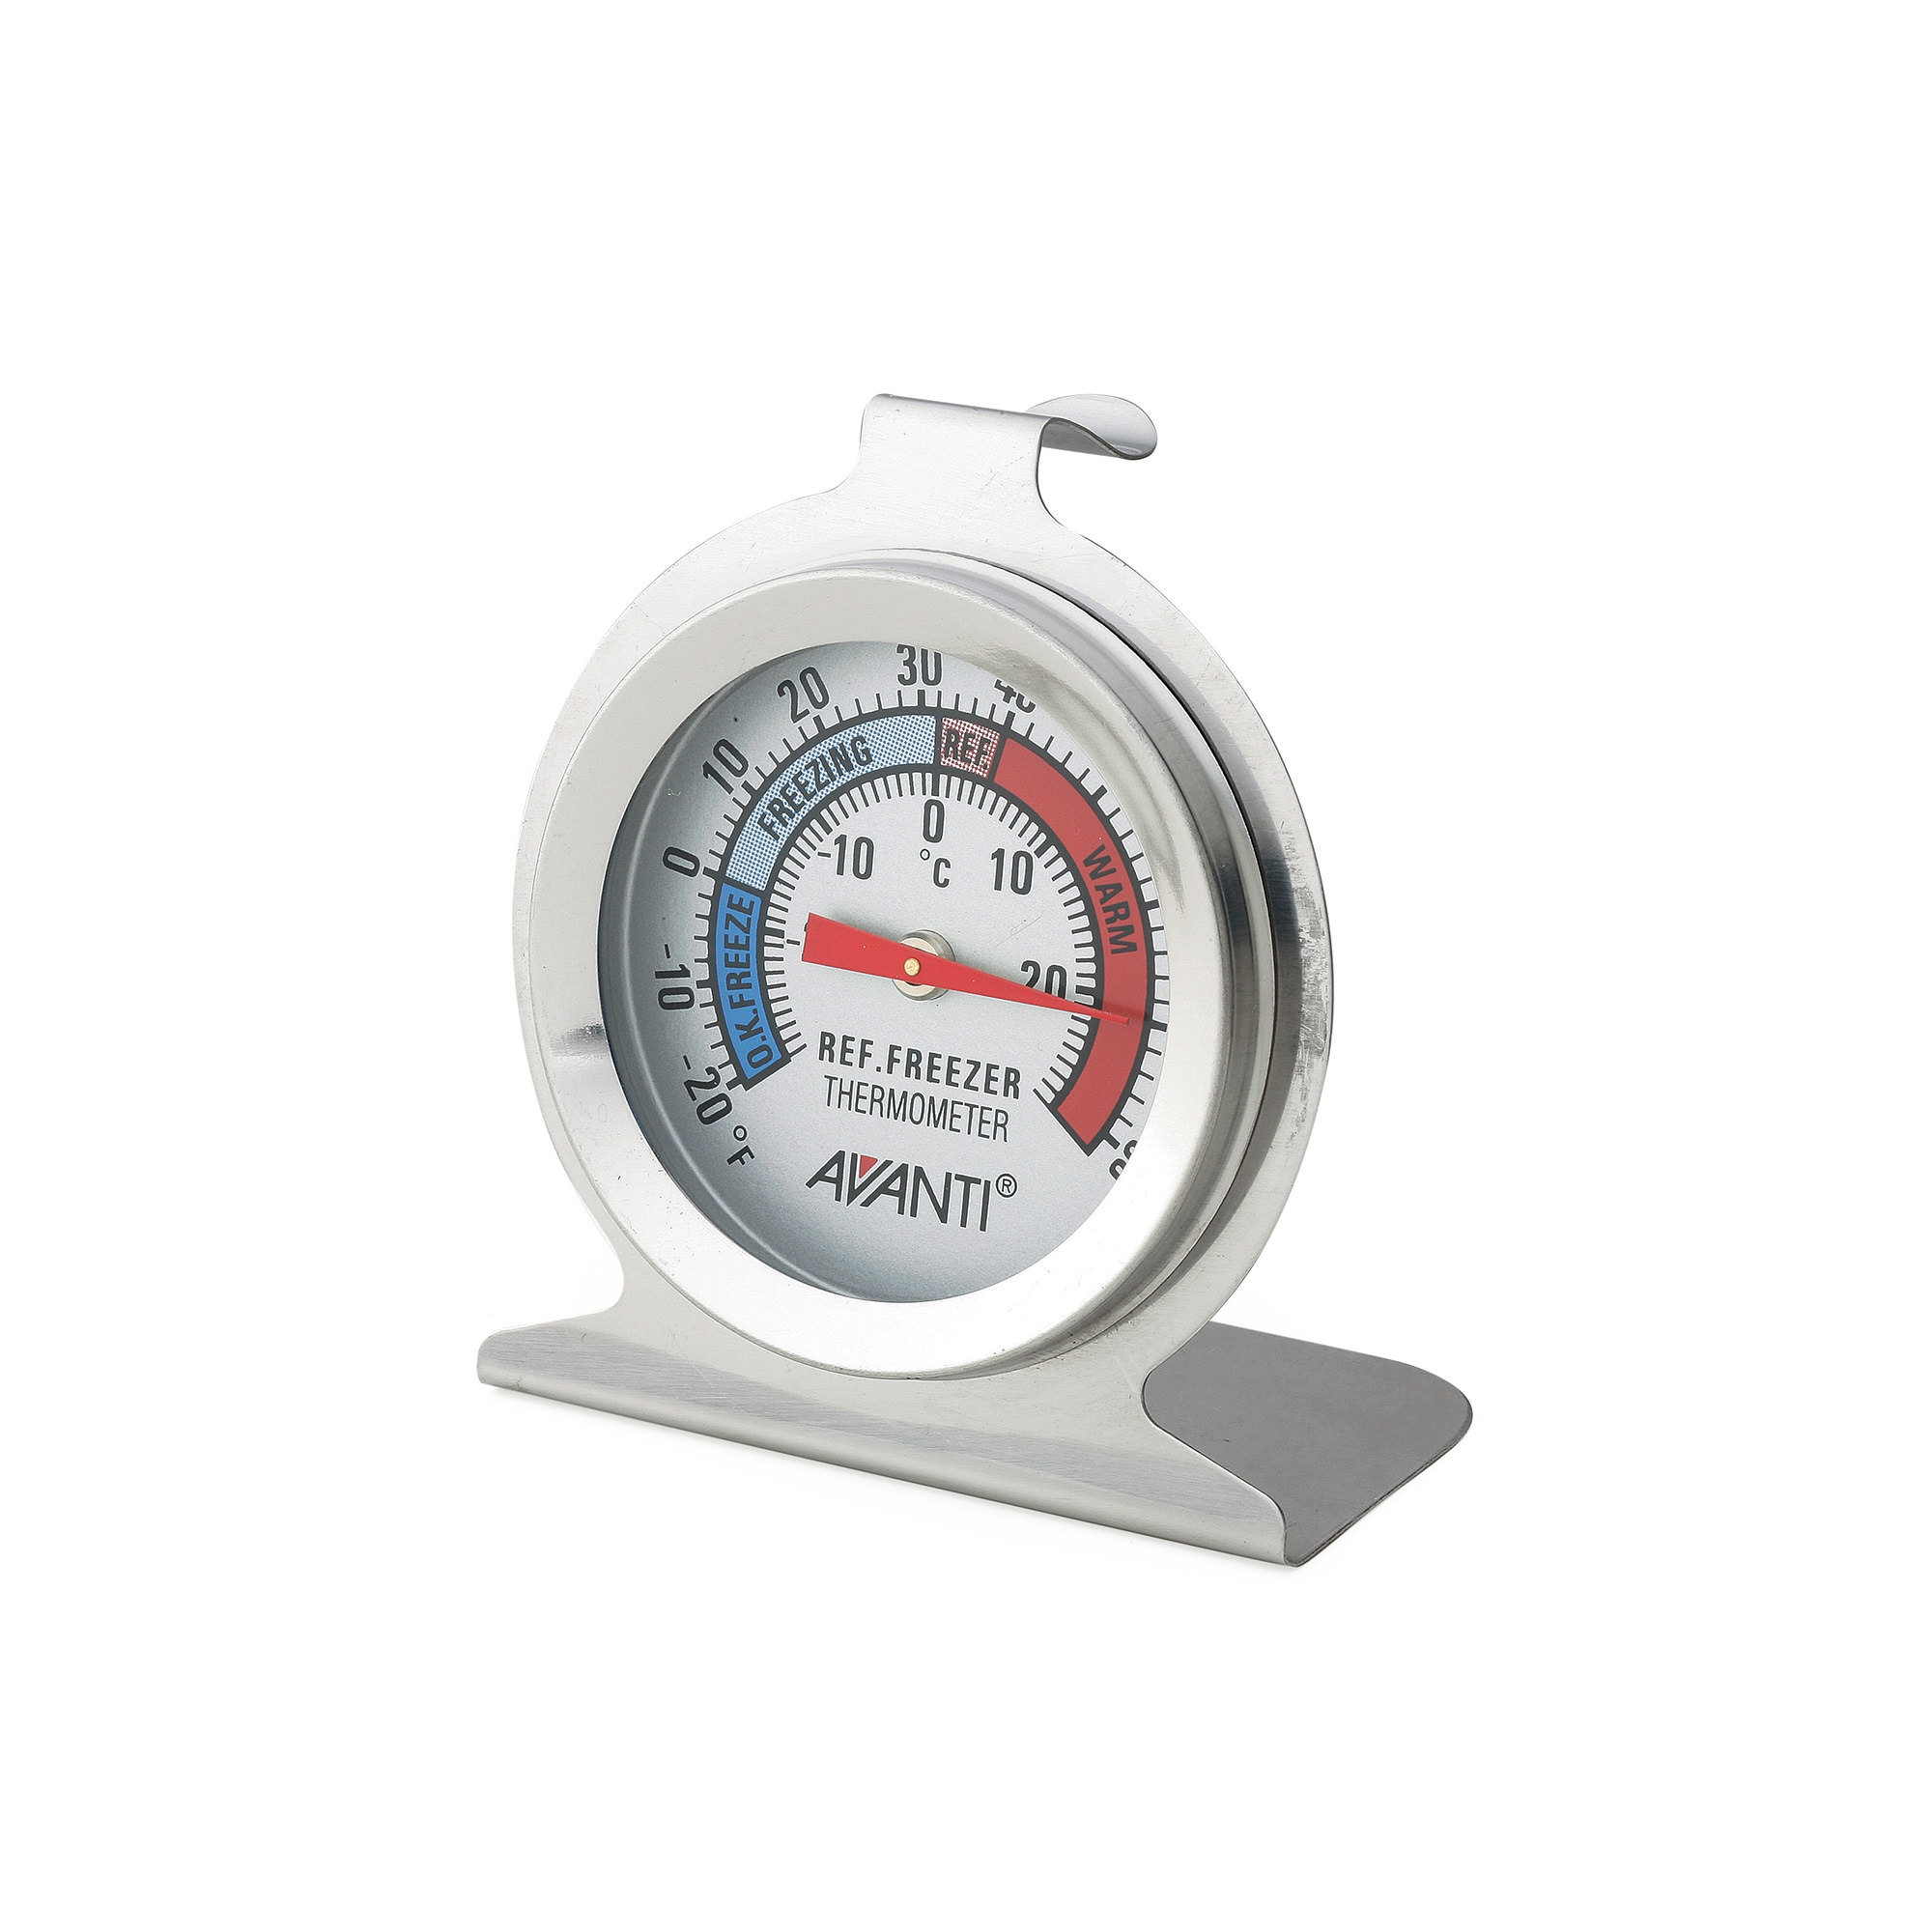 Avanti Fridge/Freezer Thermometer Image 1